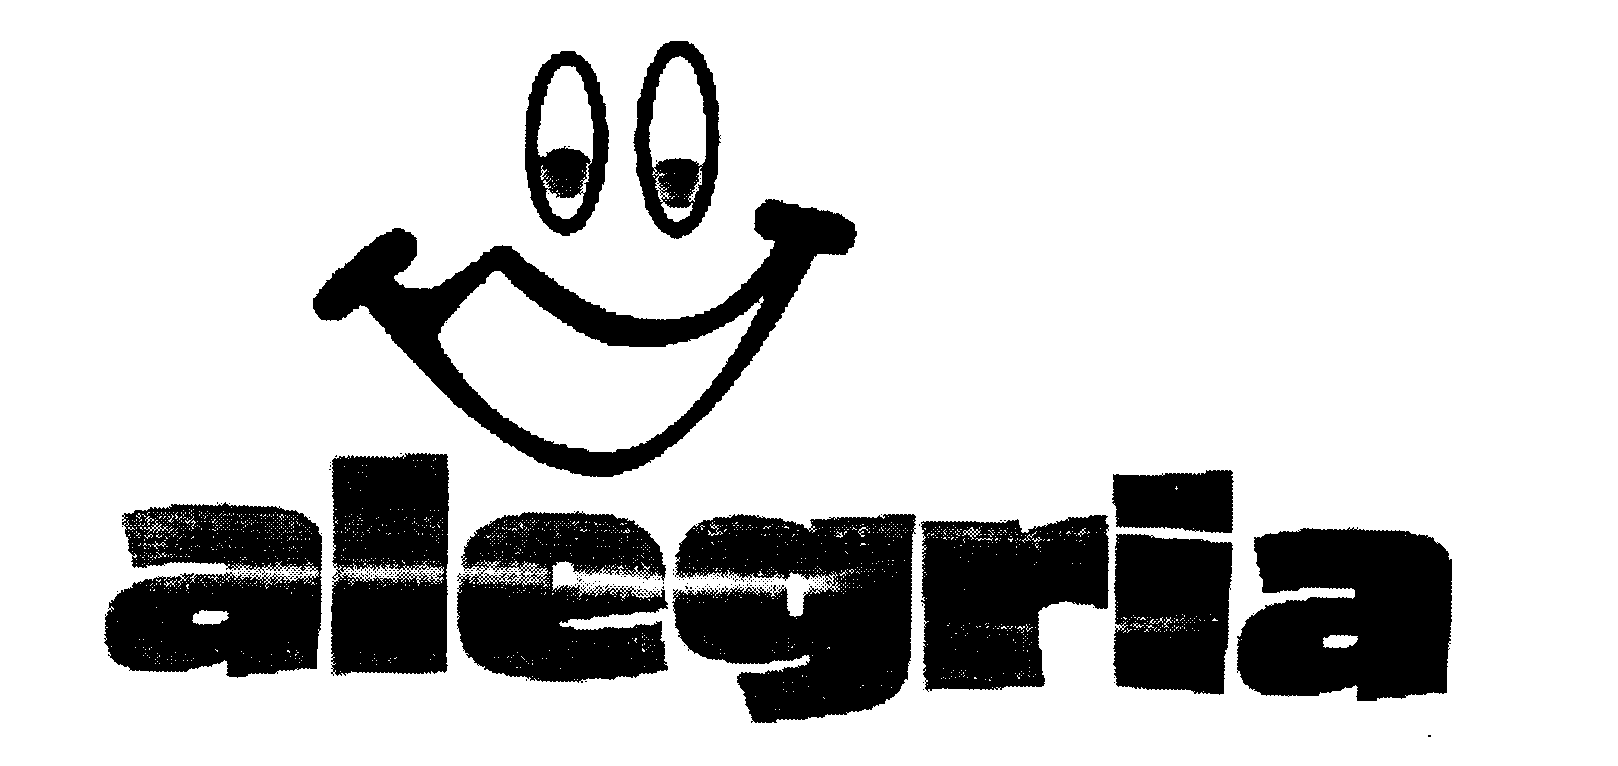 Trademark Logo ALEGRIA